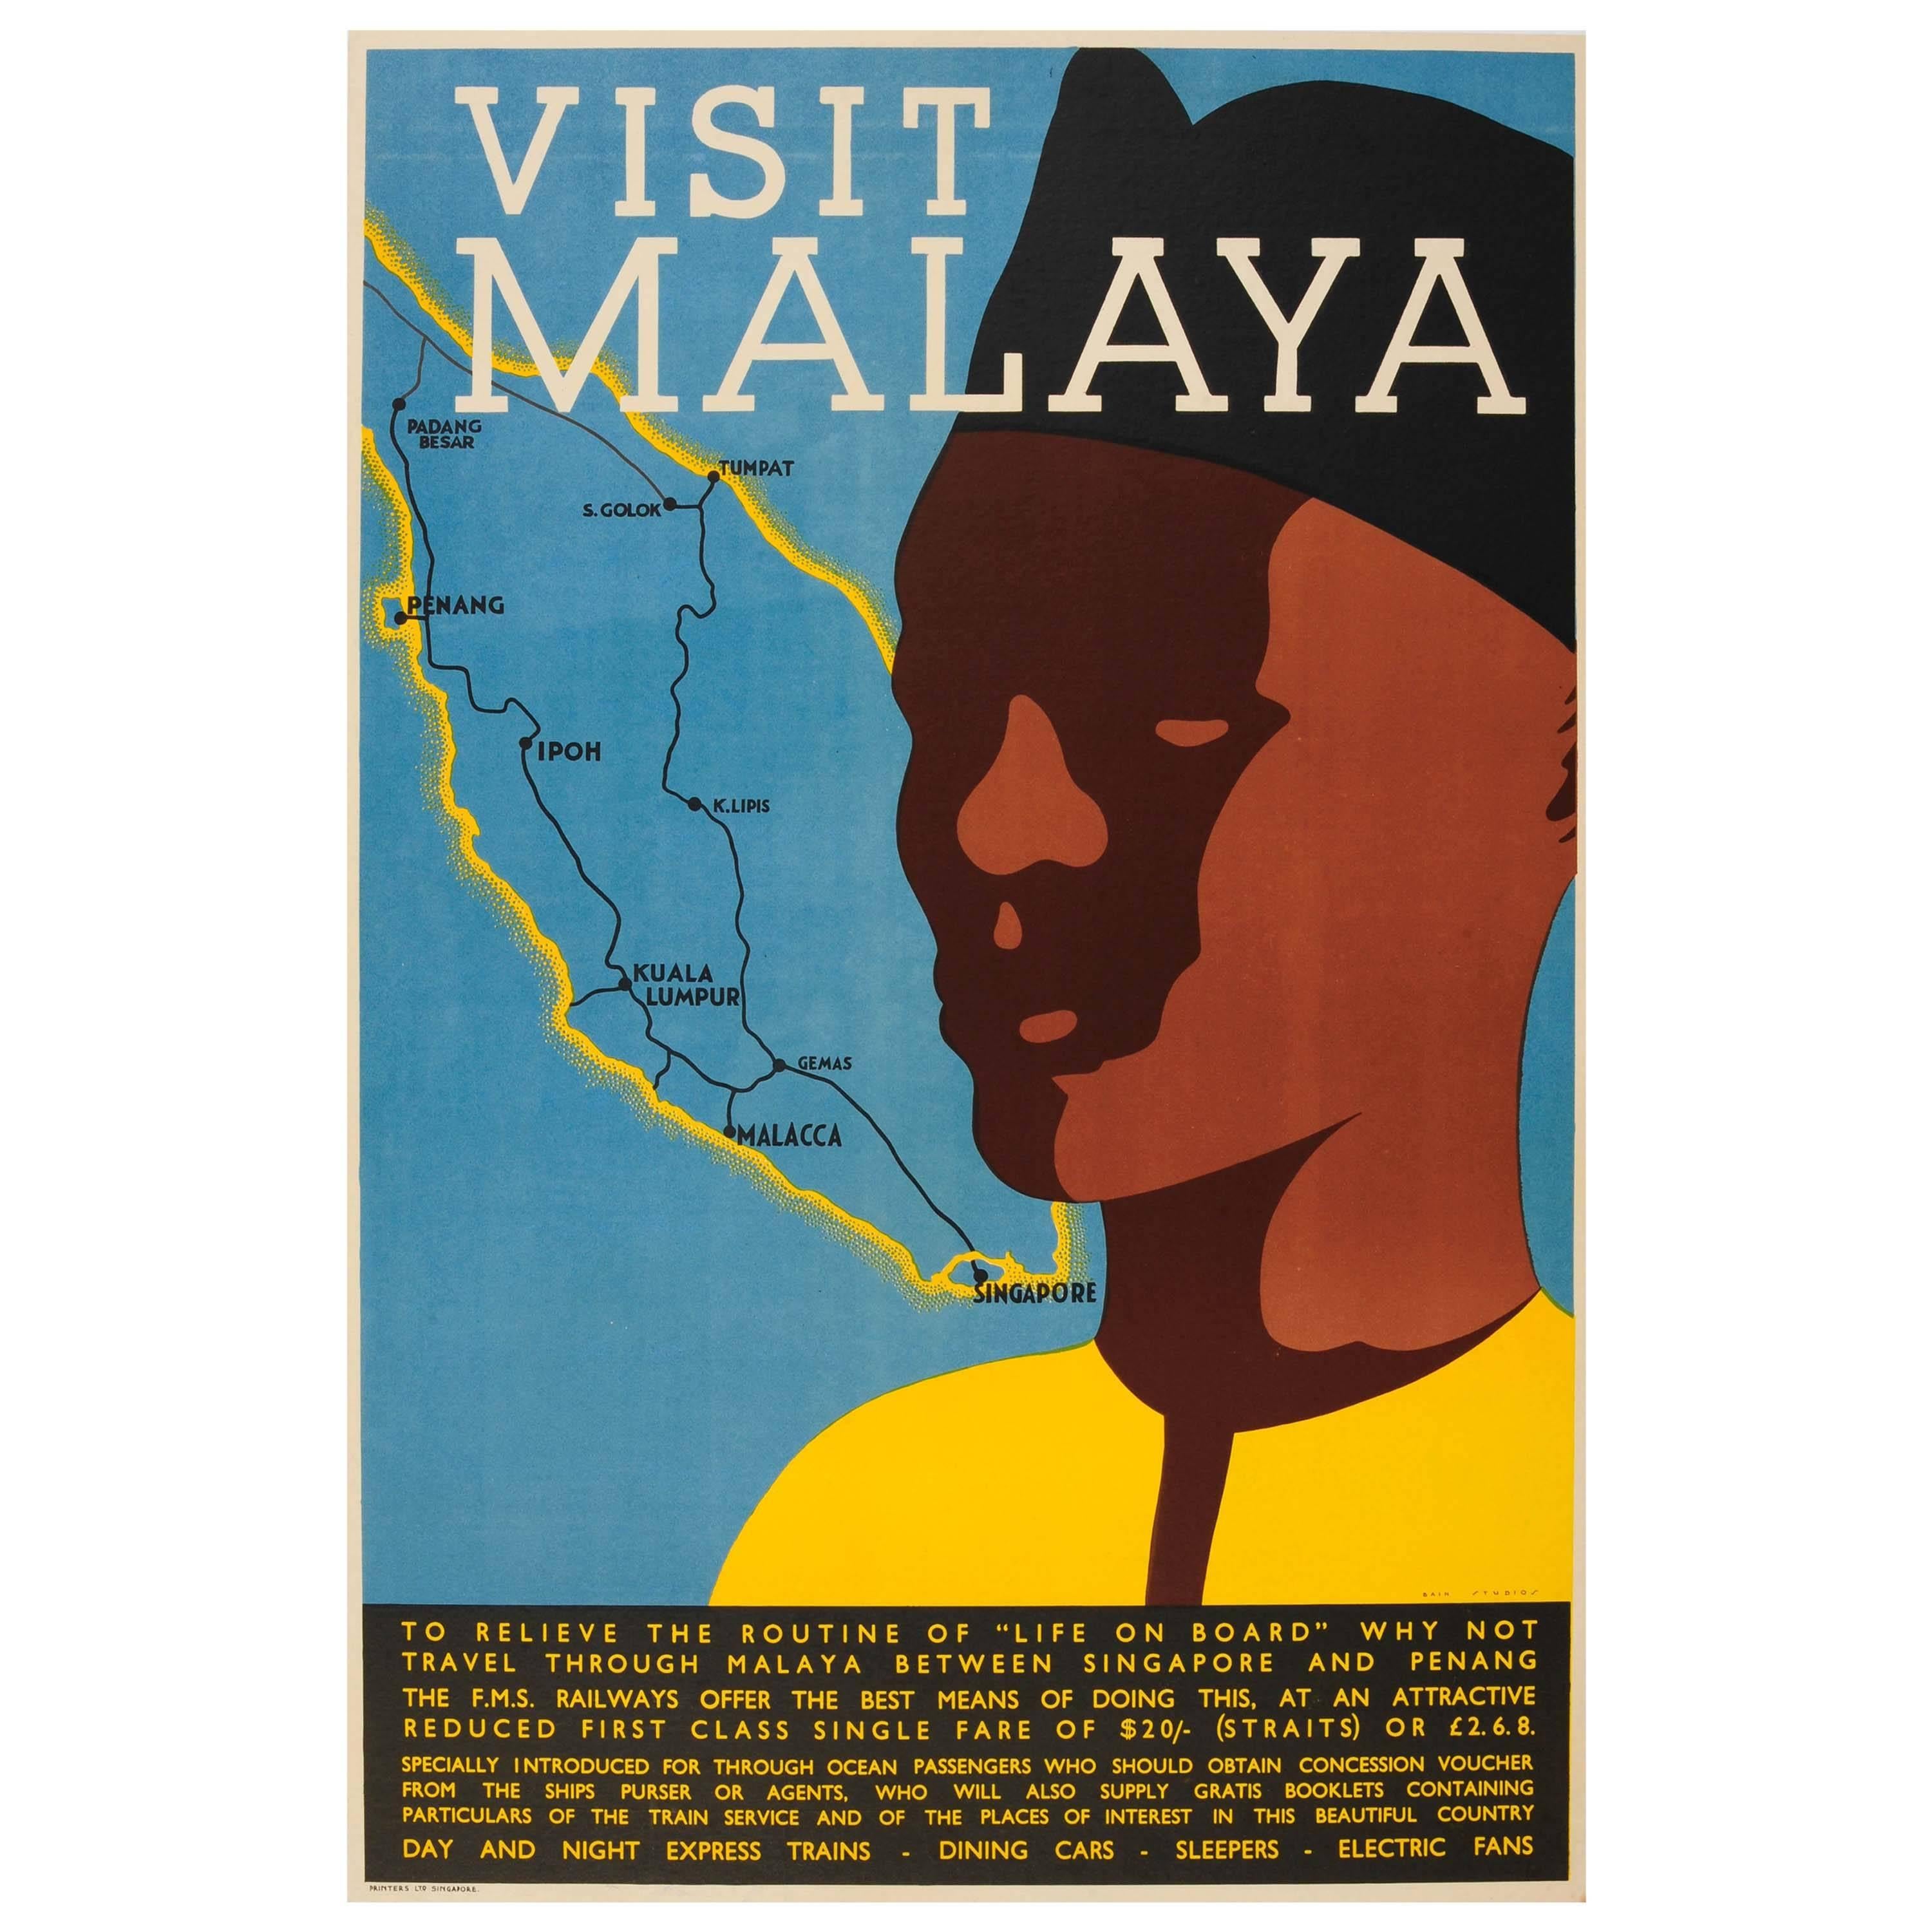 Original FMS Railways Travel Poster for Malaysia and Singapore - Visit Malaya